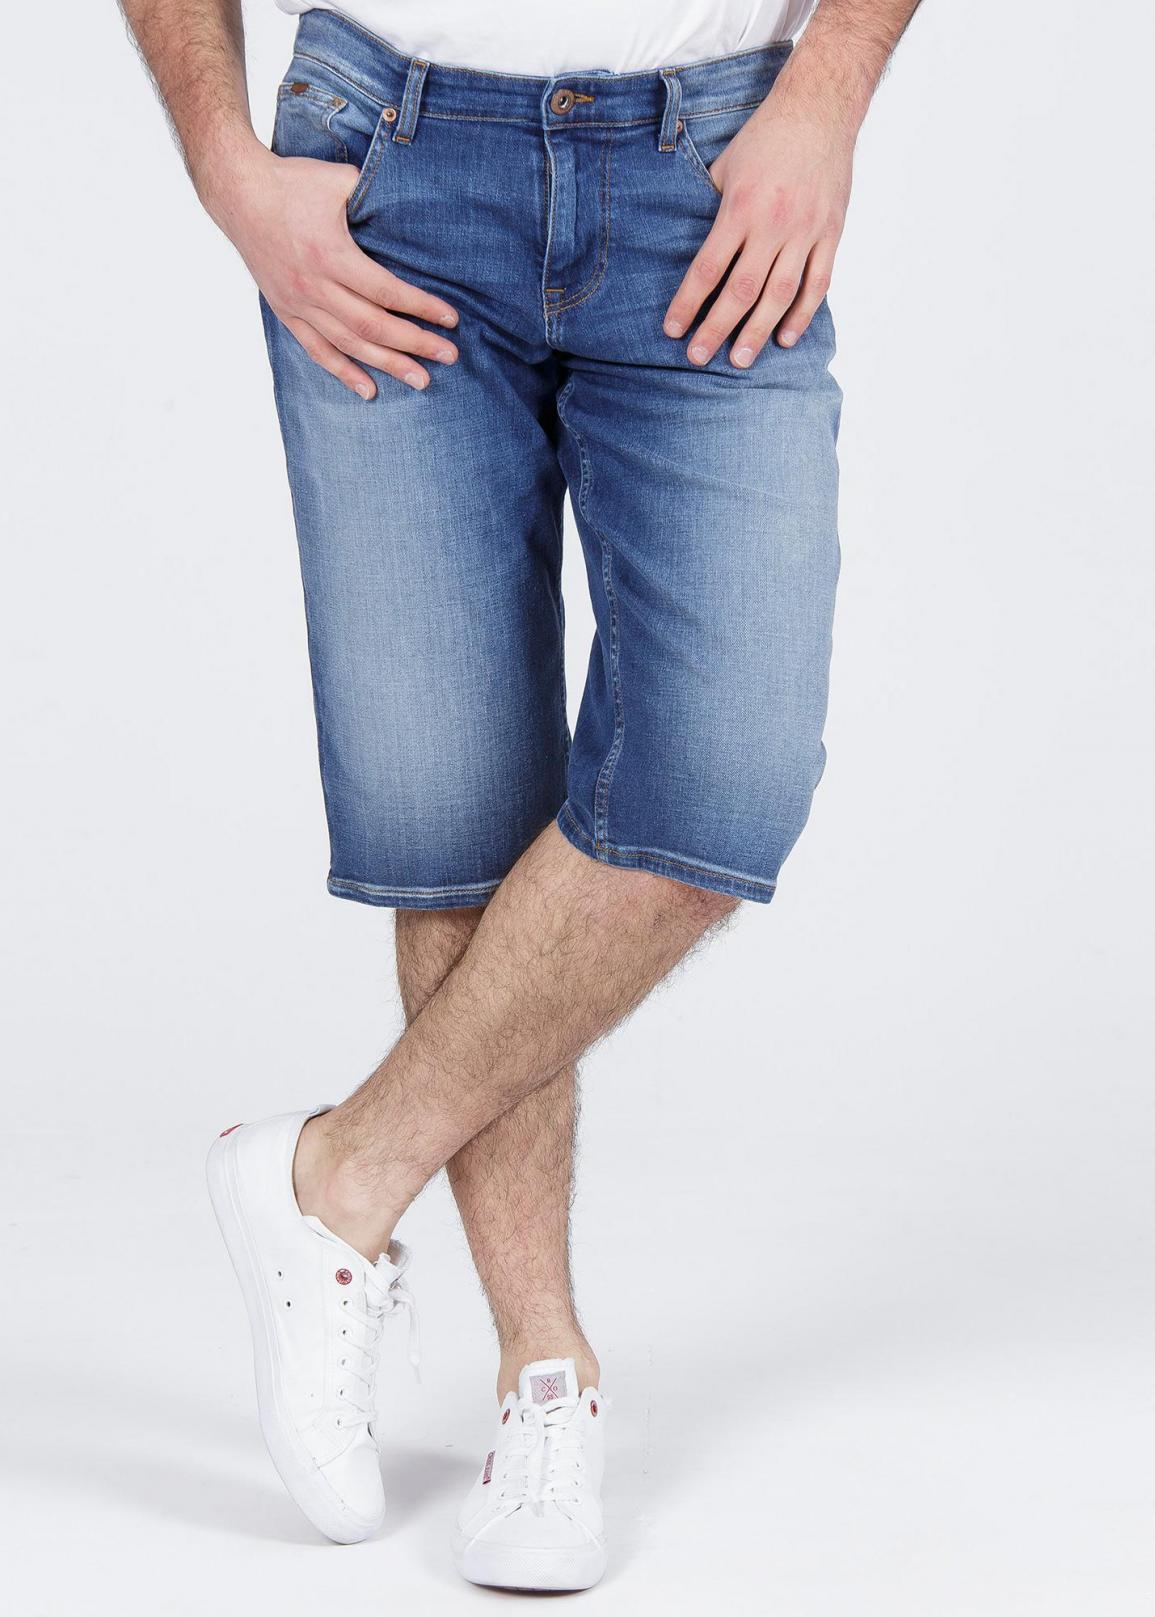 Cross Jeans® Max Shorts - Dark Blue (016)